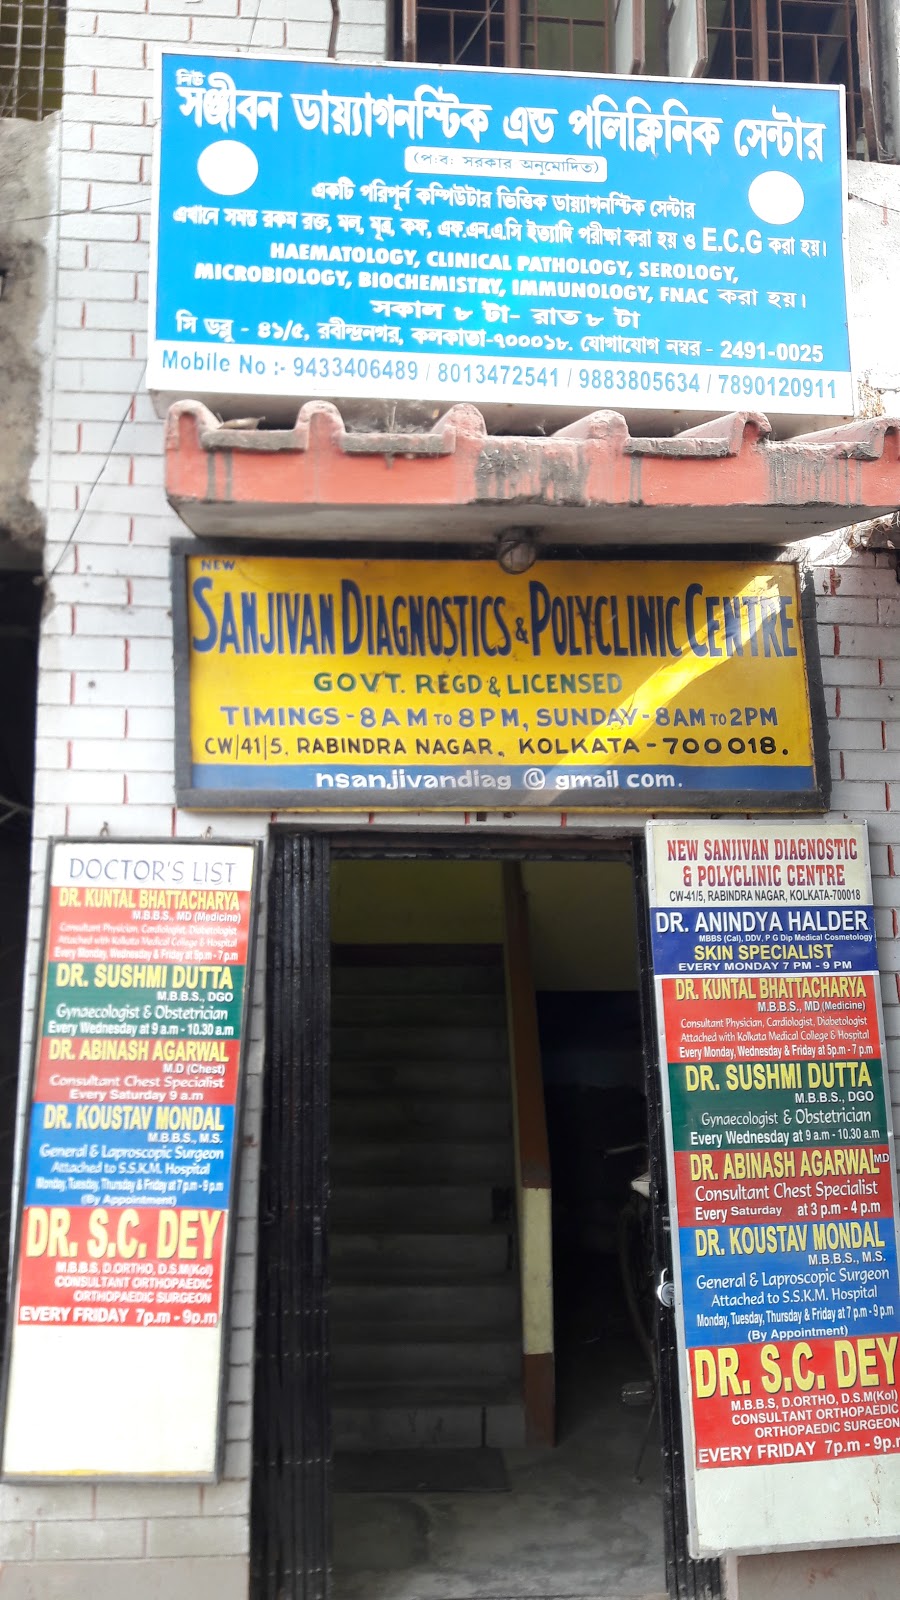 Sanjivan Diagnostics & Polyclinic Centre